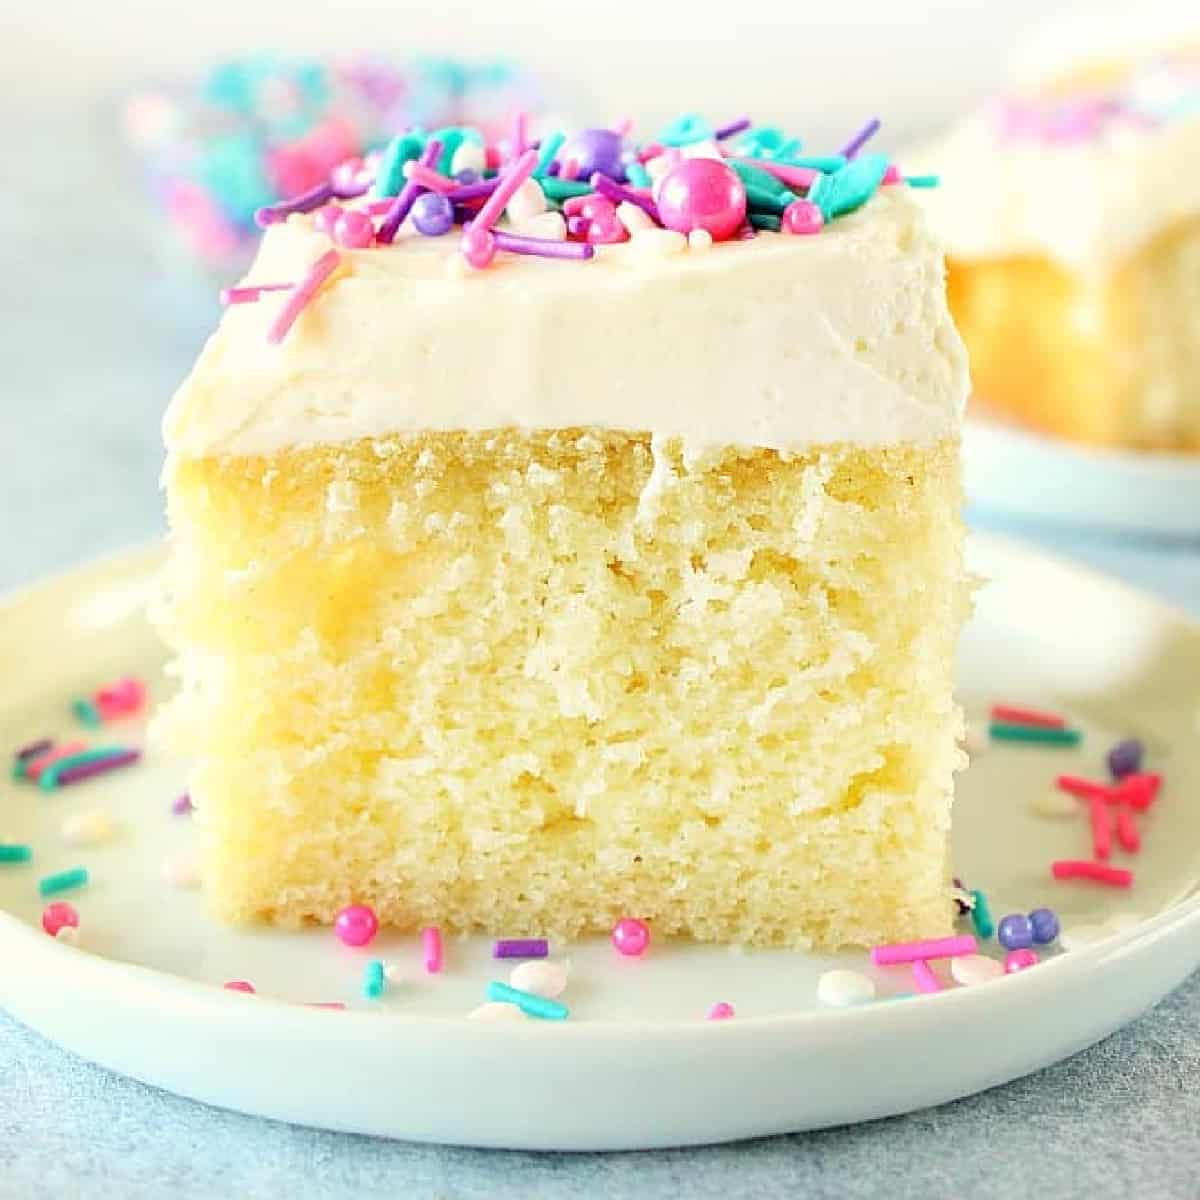 https://www.crunchycreamysweet.com/wp-content/uploads/2019/05/one-bowl-vanilla-cake-feat.jpg